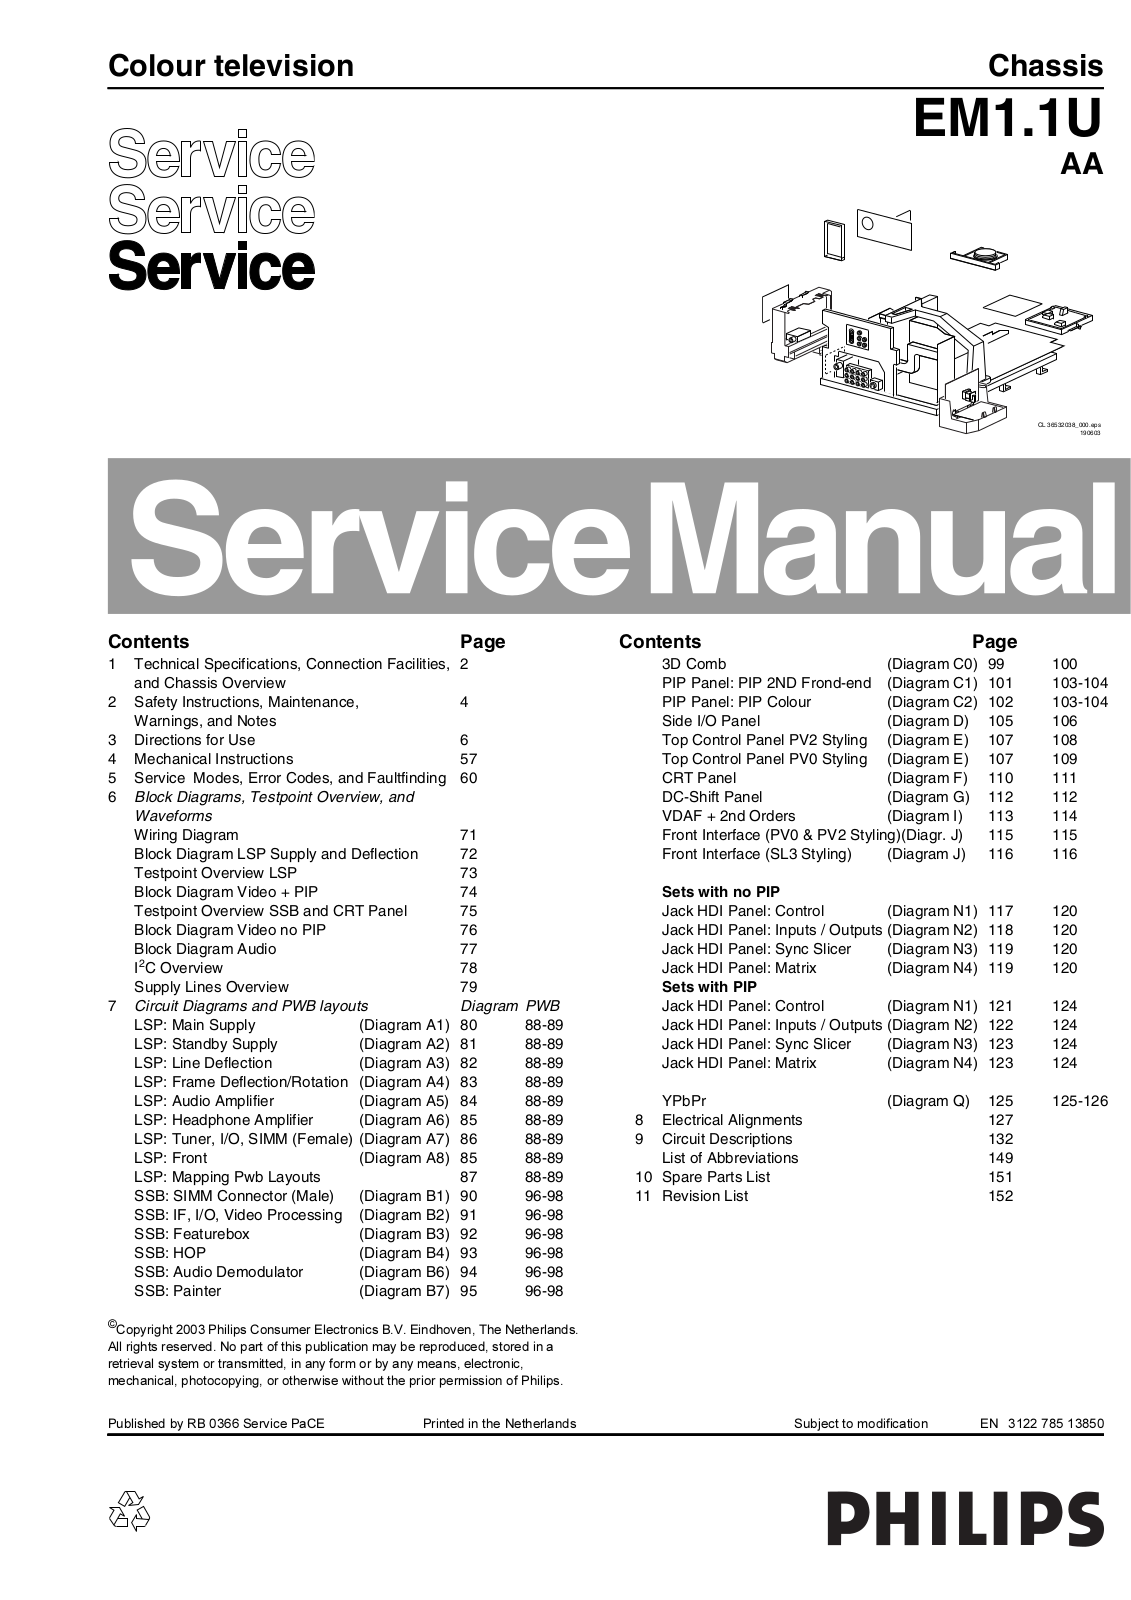 PHILIPS EM1.1U AA Service Manual